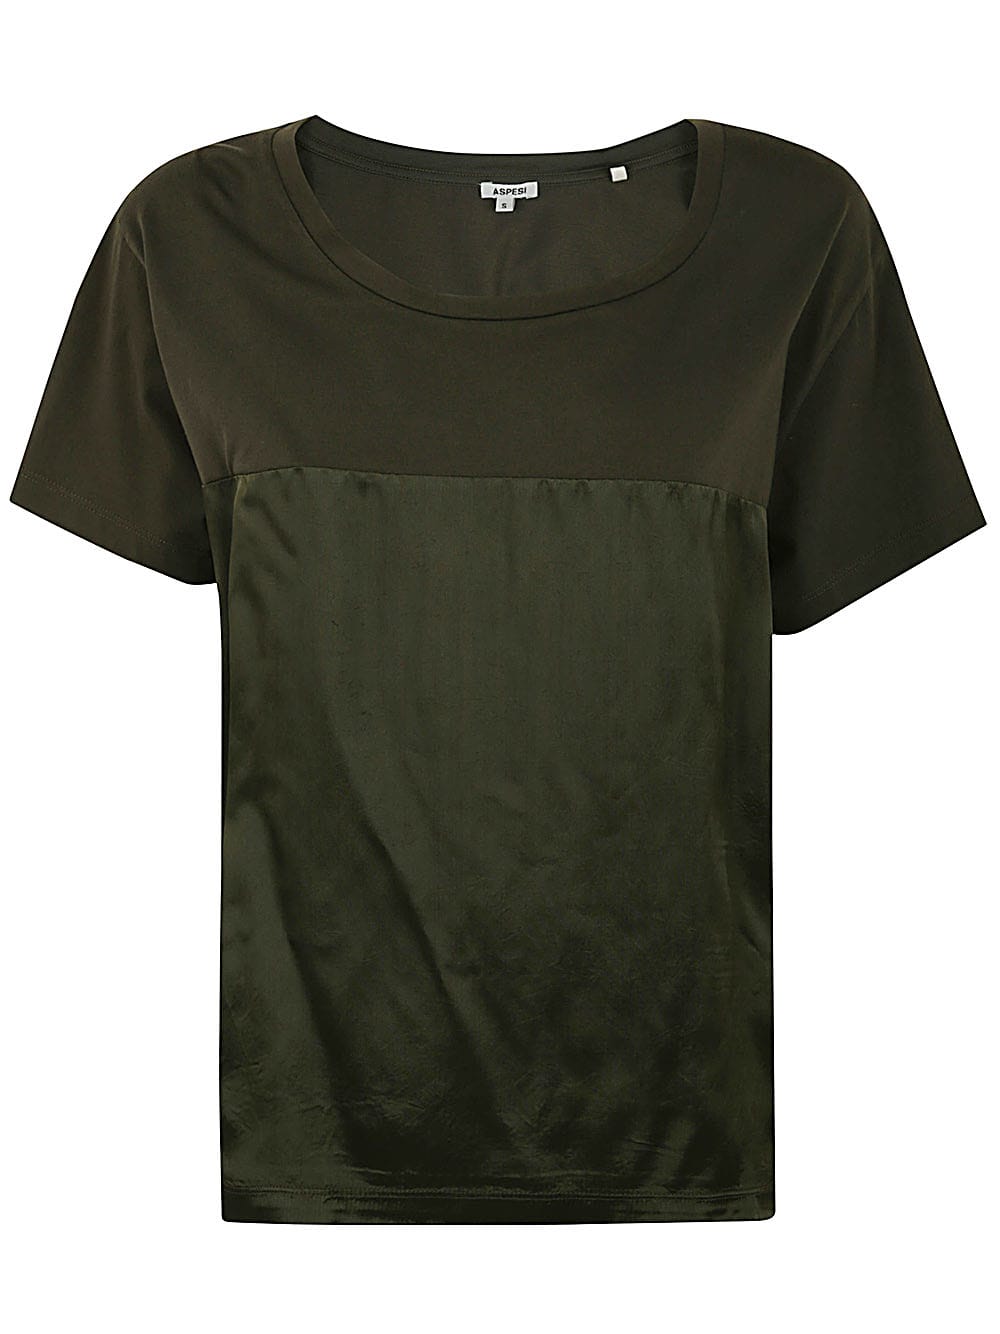 Aspesi Mod Z183 T-shirt In Military